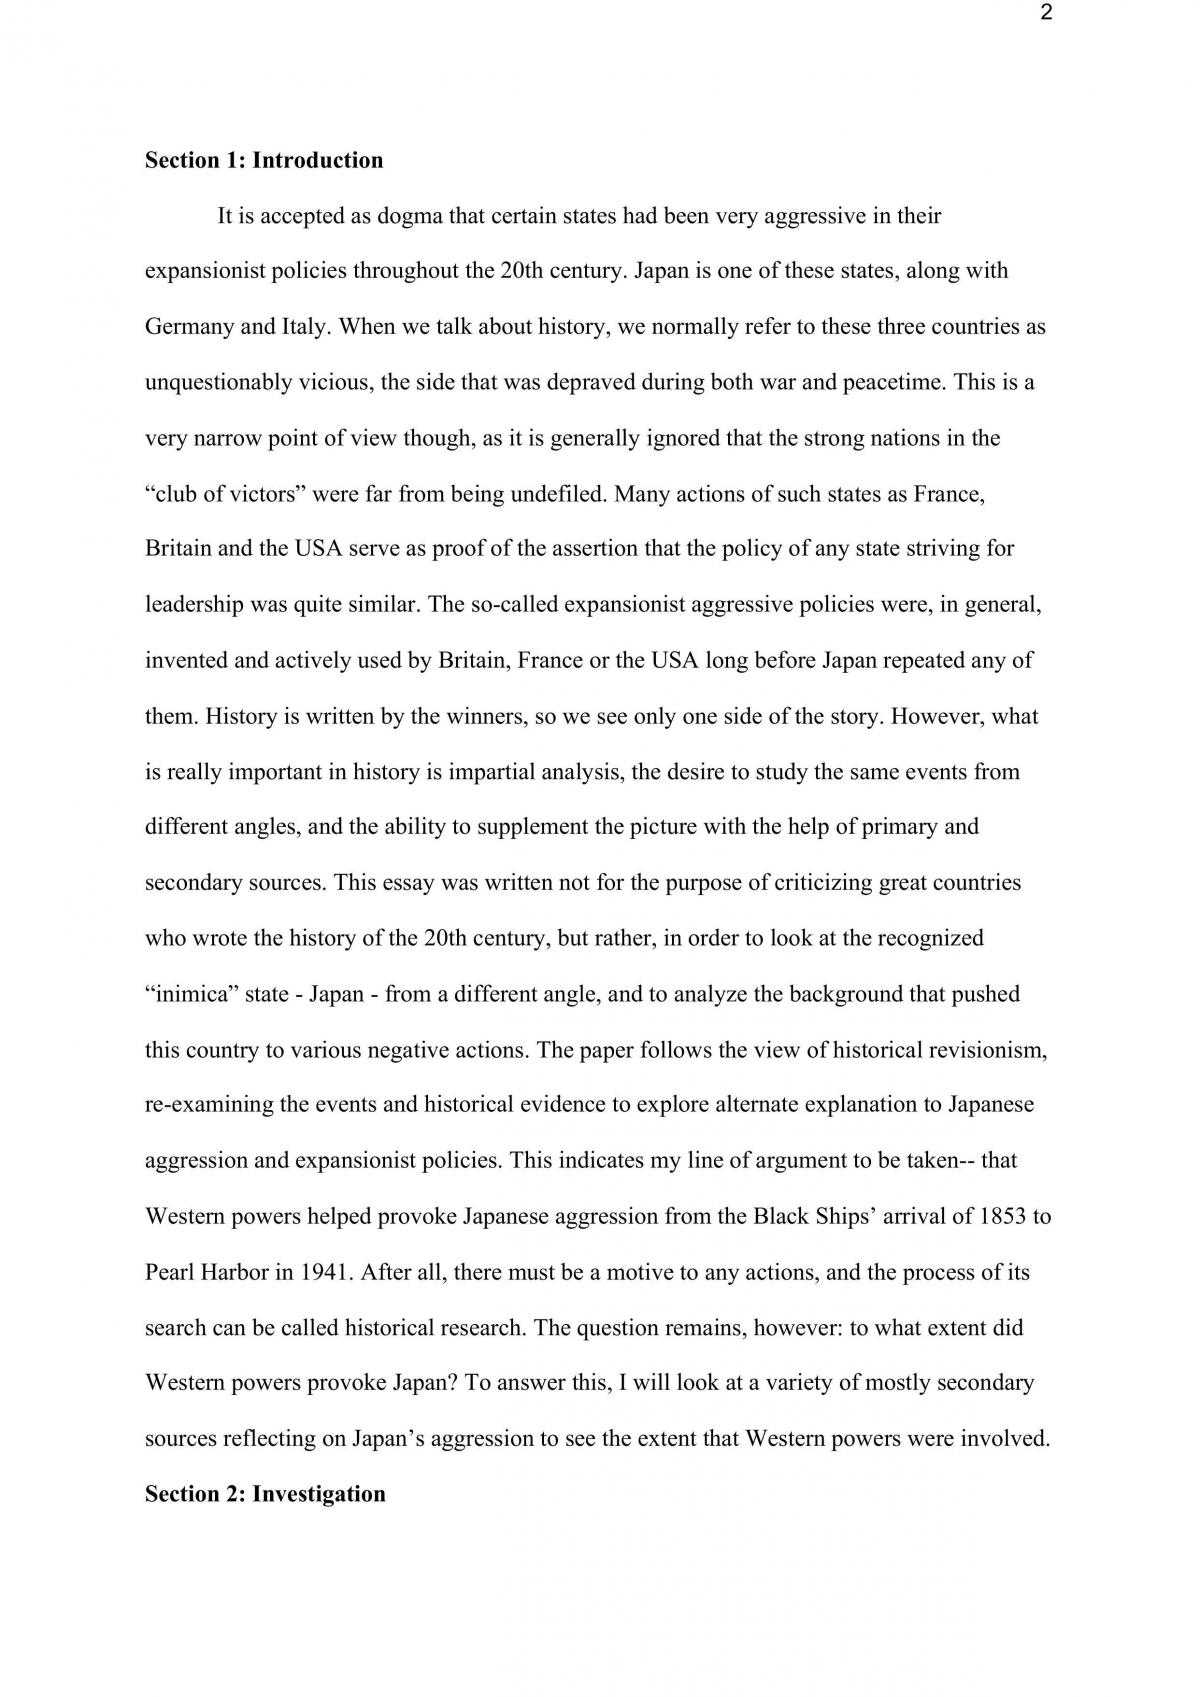 ib history paper 2 essay example